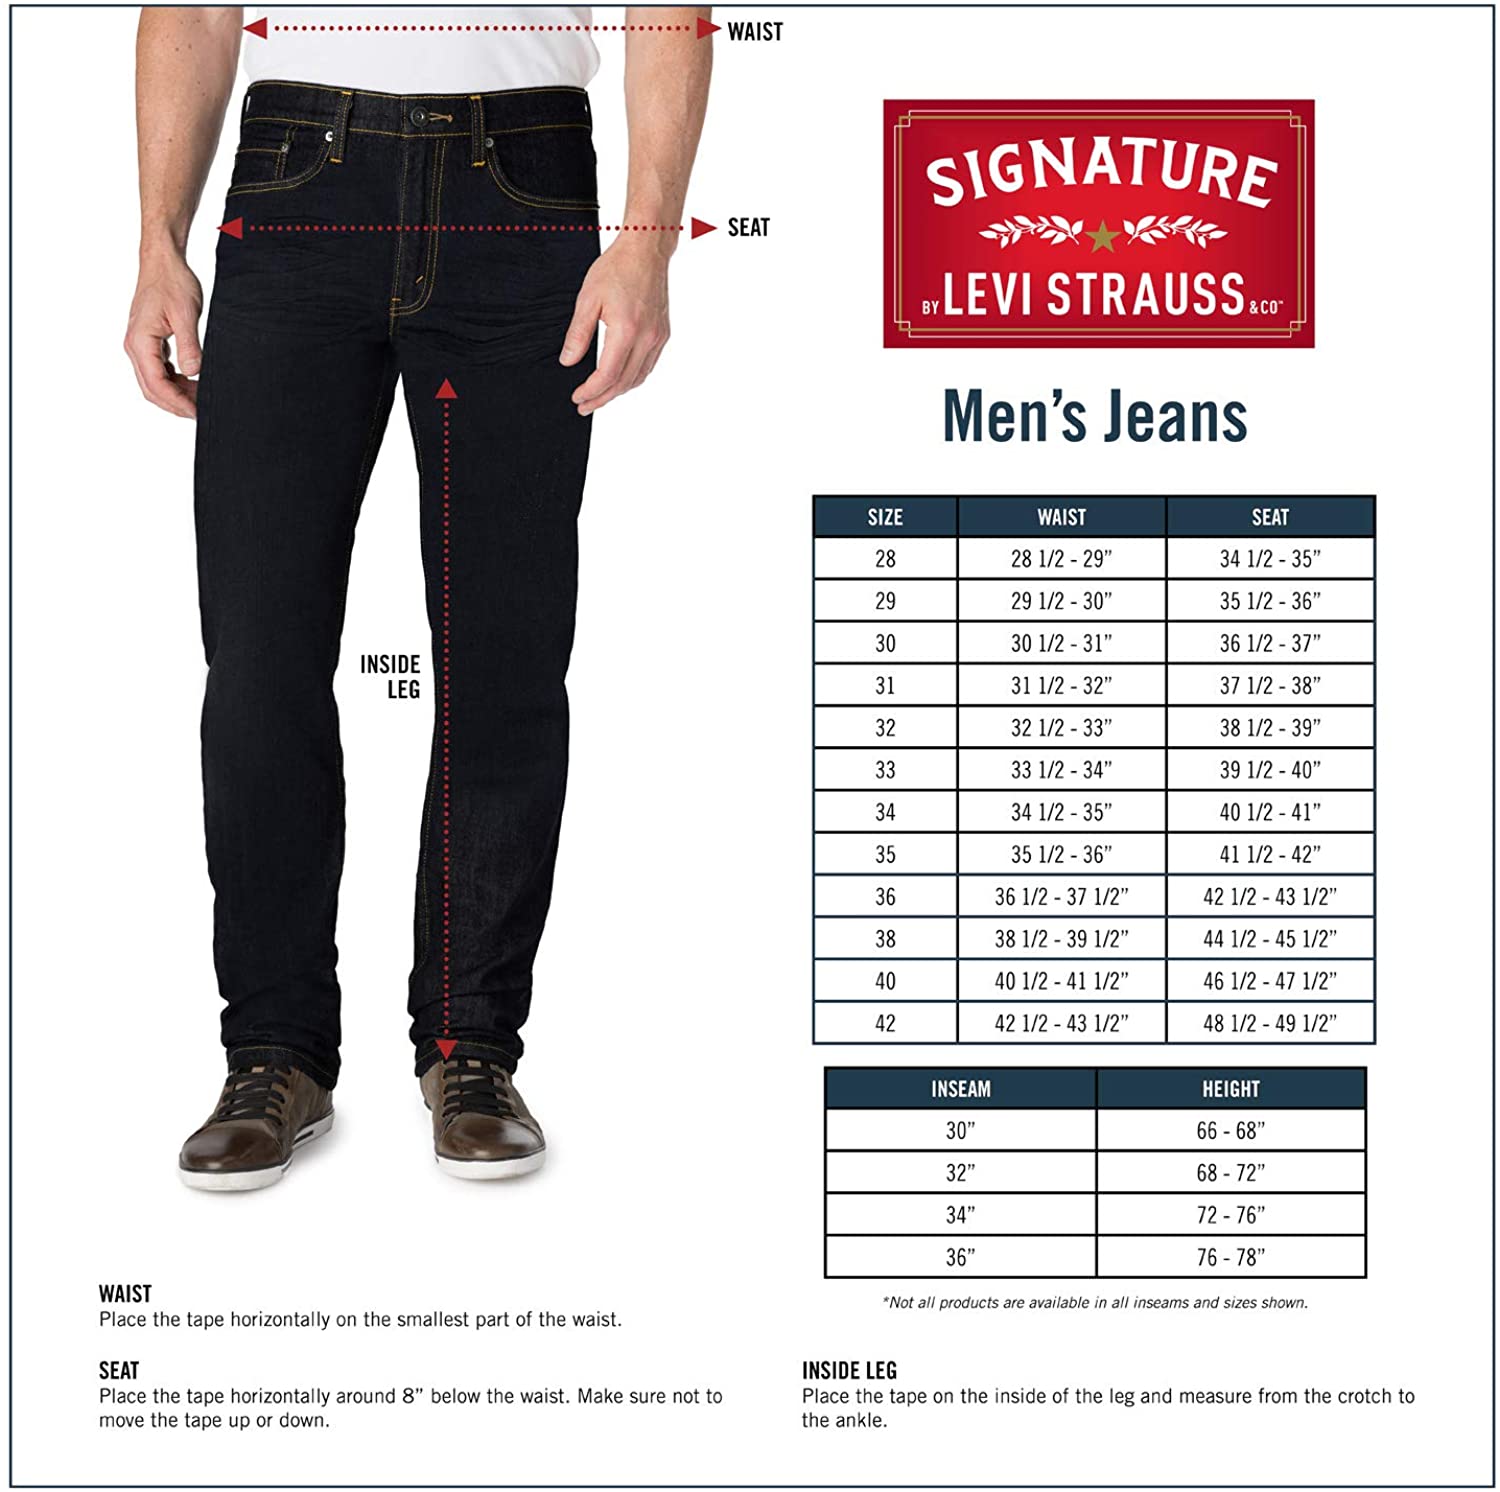 Levi Strauss Gold Label Jeans